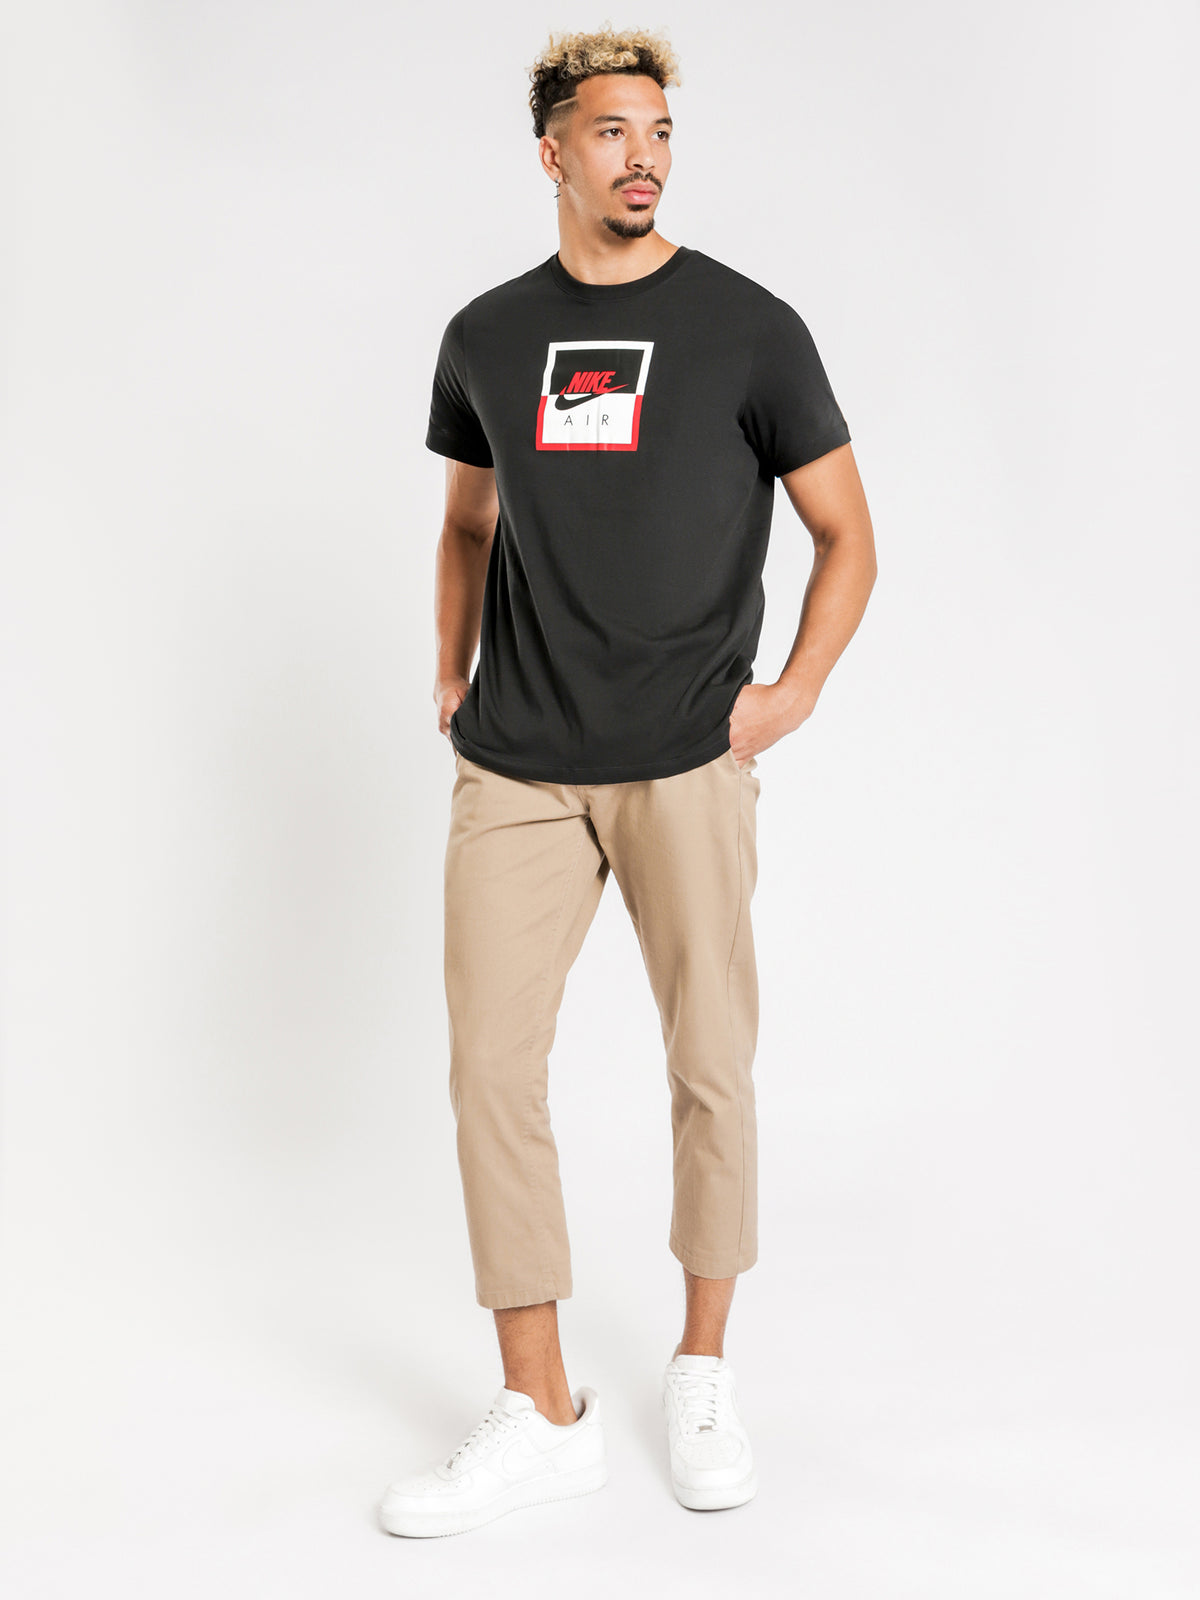 NSW Air Short Sleeve T-Shirt in Black